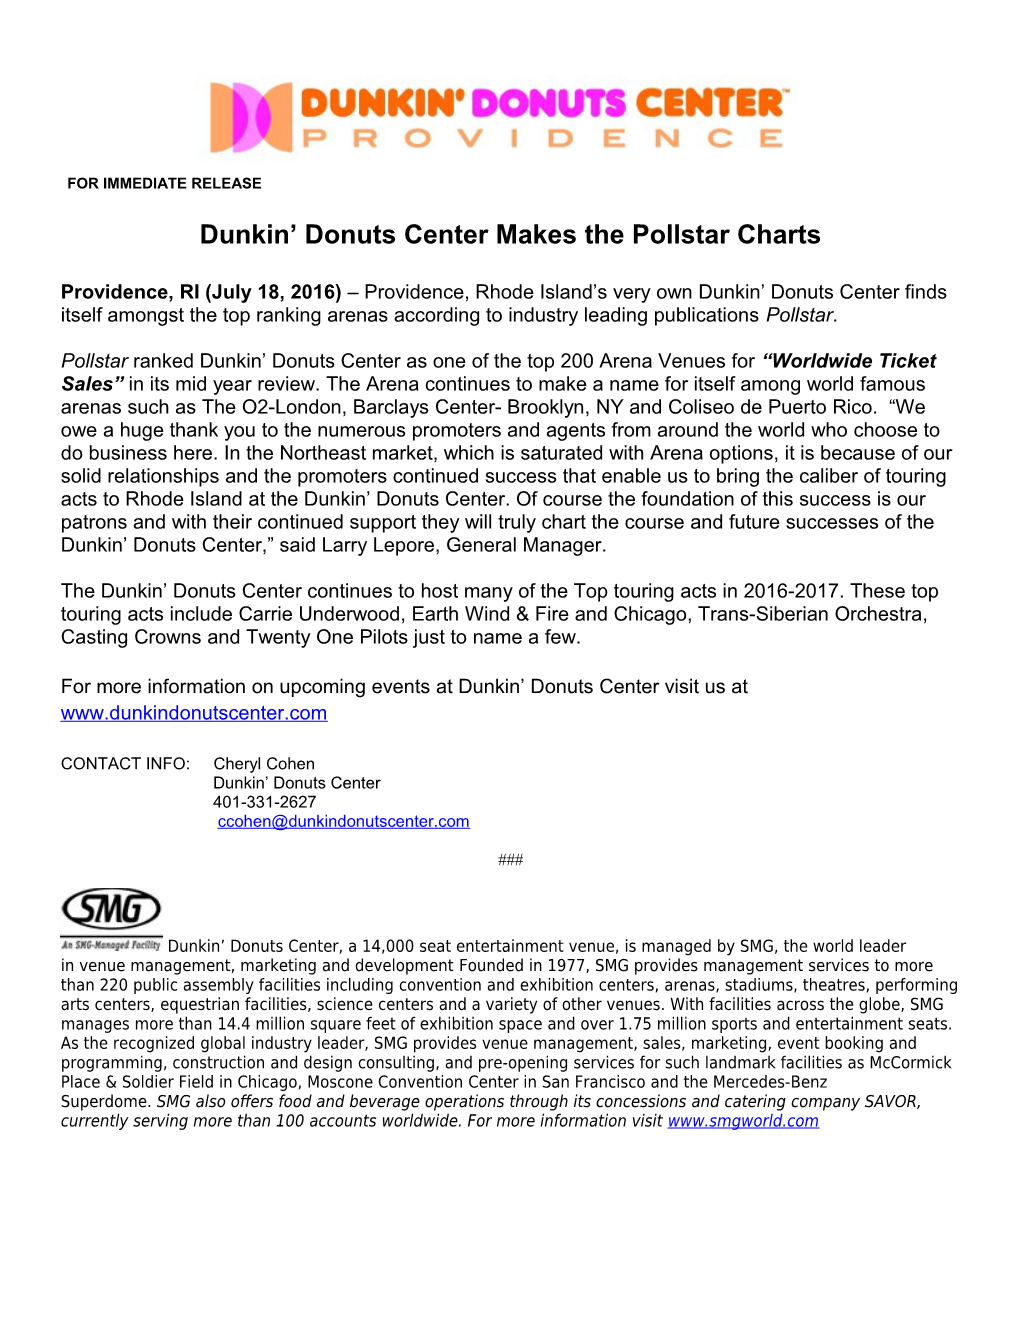 Dunkin Donuts Center Makes the Pollstar Charts